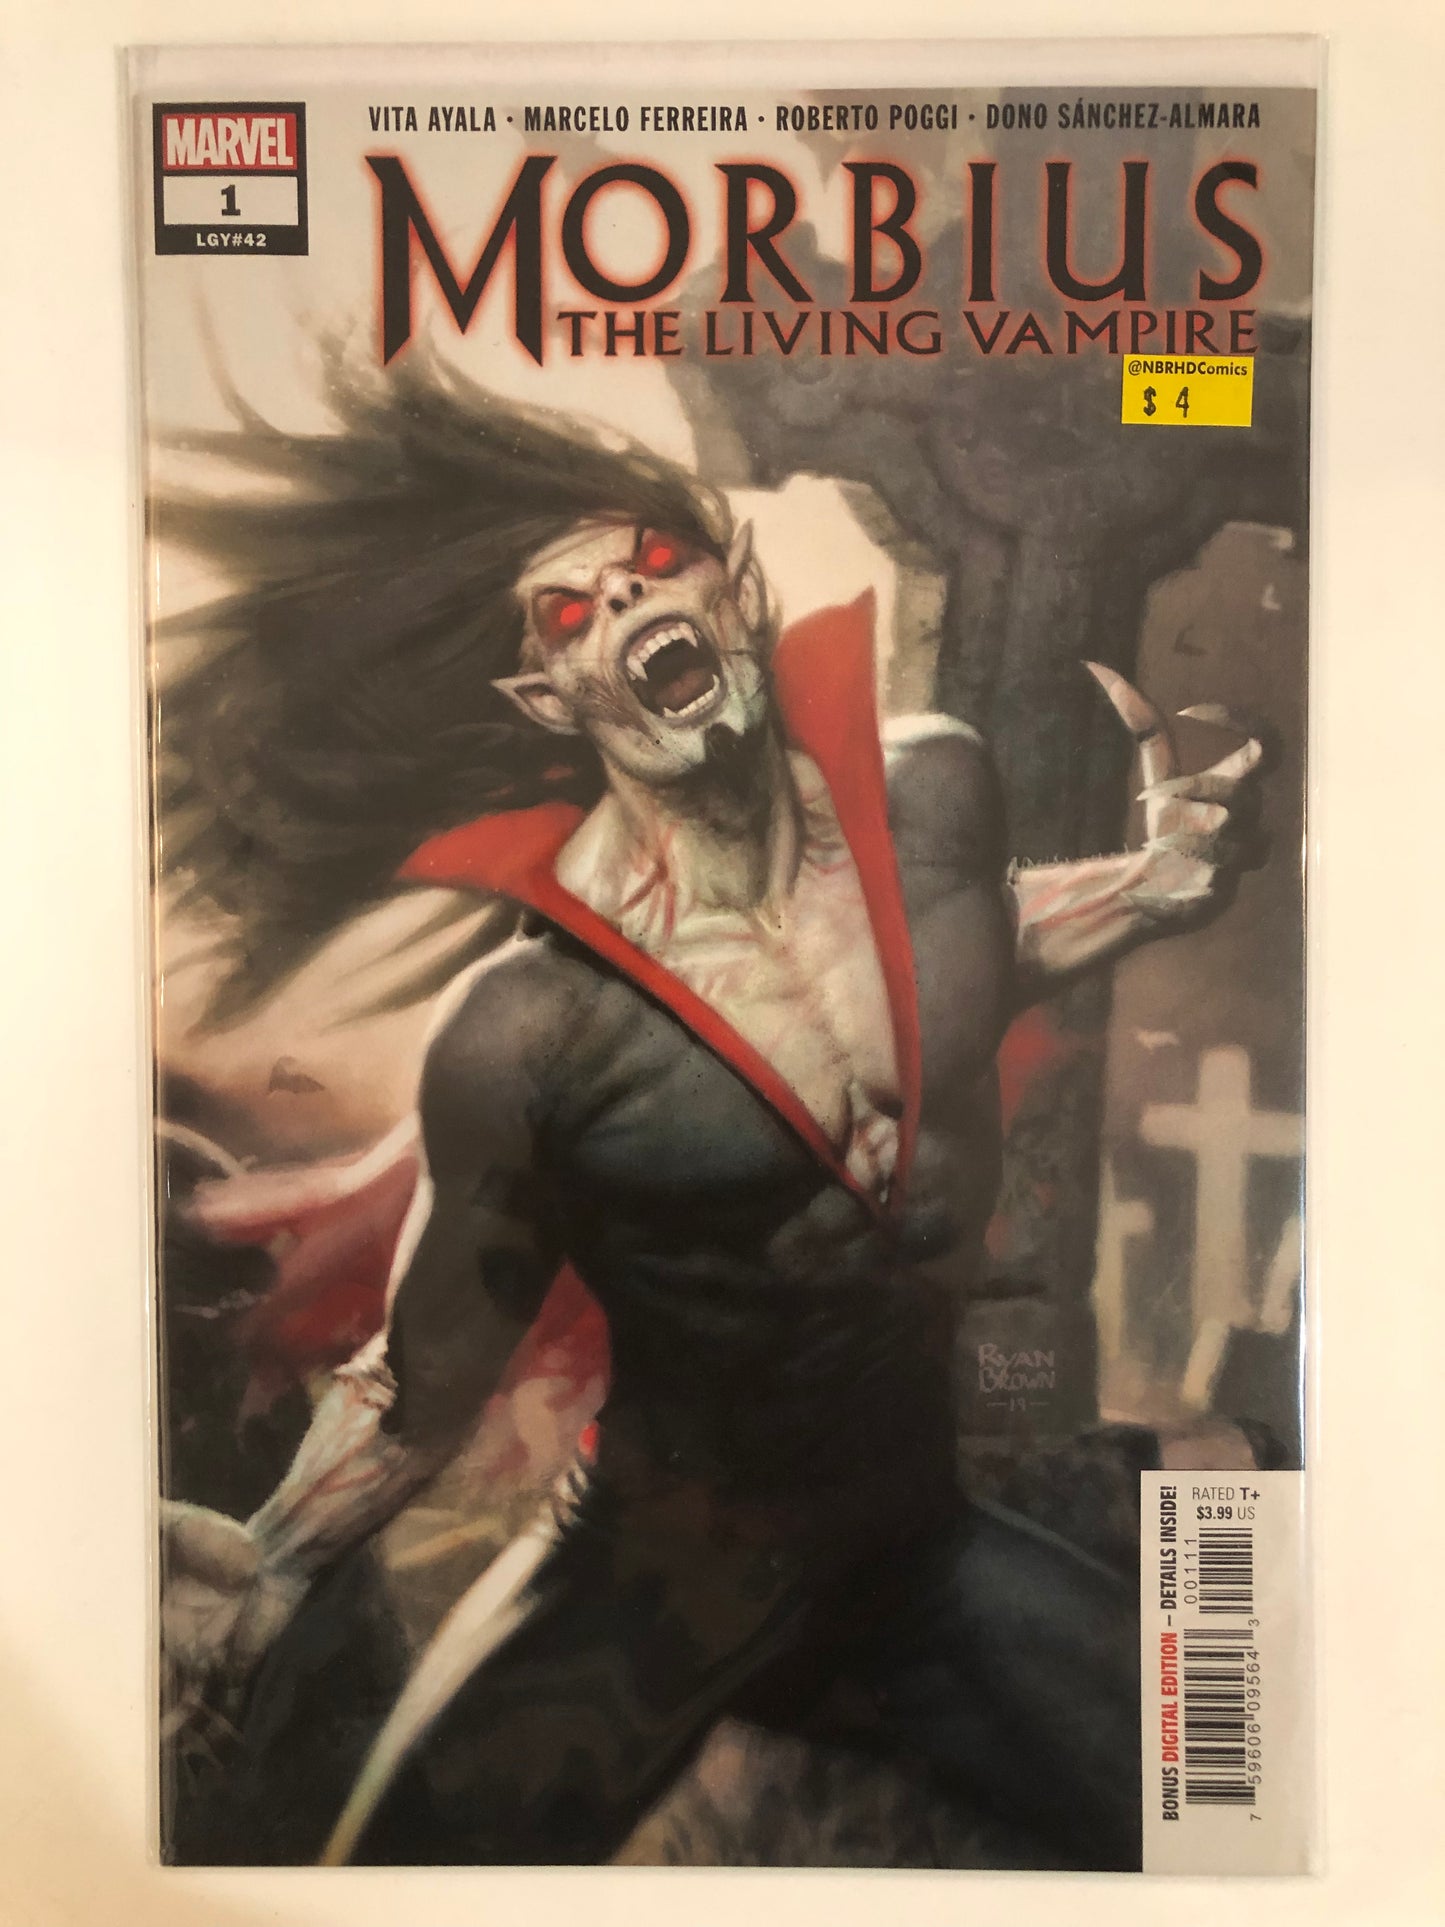 Morbius: The Living Vampire #1